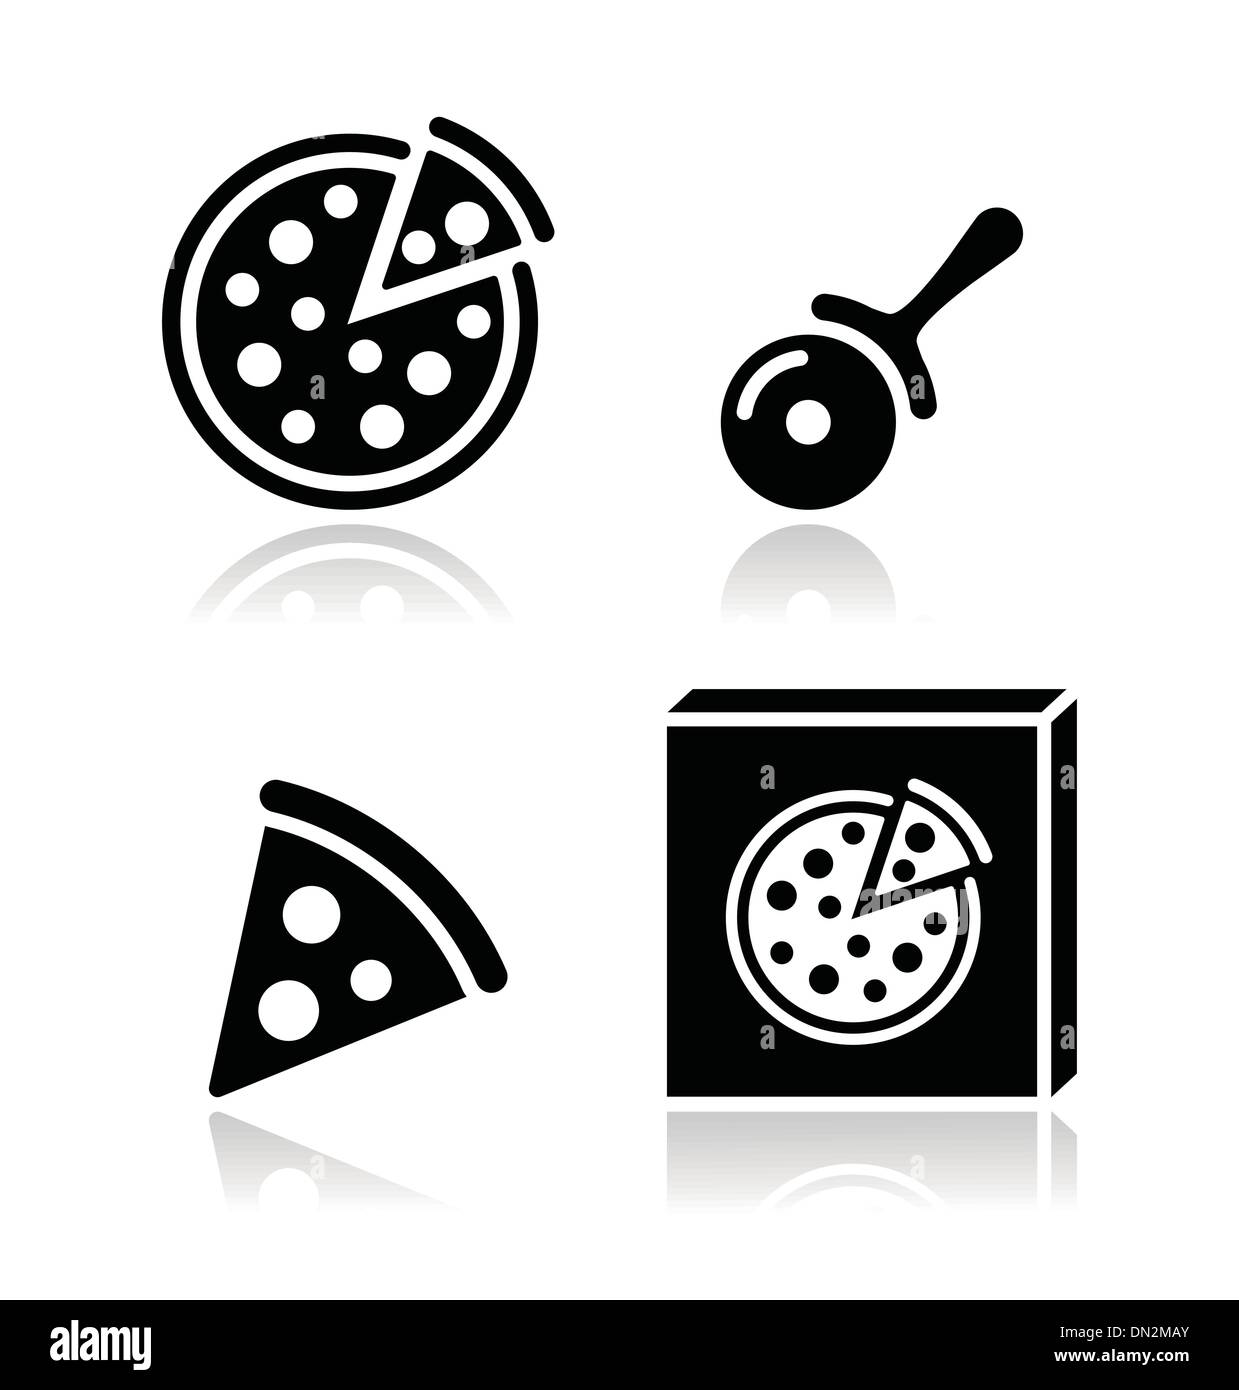 Pizza-Vektor-Icons set mit Reflexionen Stock Vektor